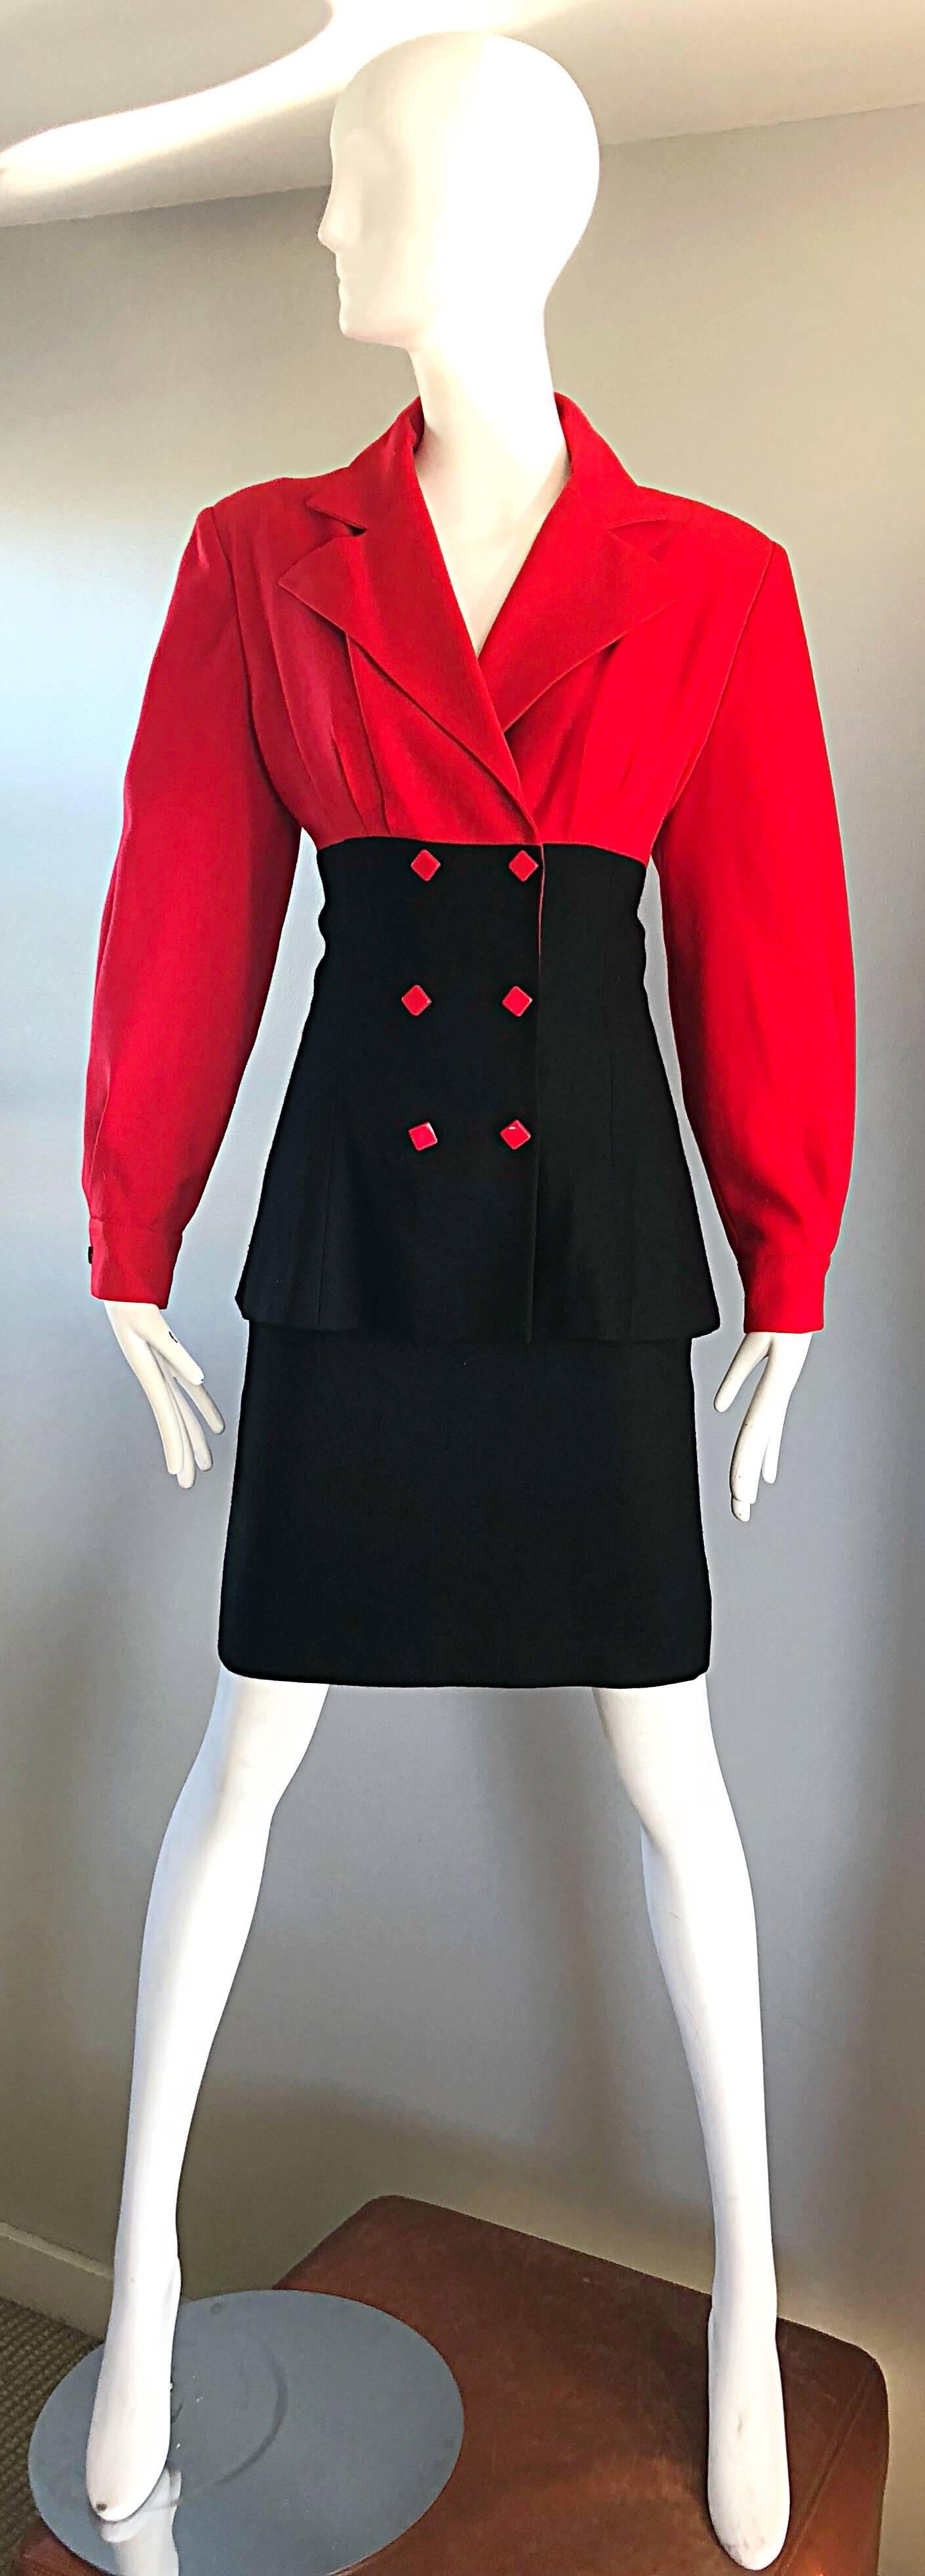 Patrick Kelly Vintage Lipstick Red and Black Color Block Avant Garde Skirt Suit 2